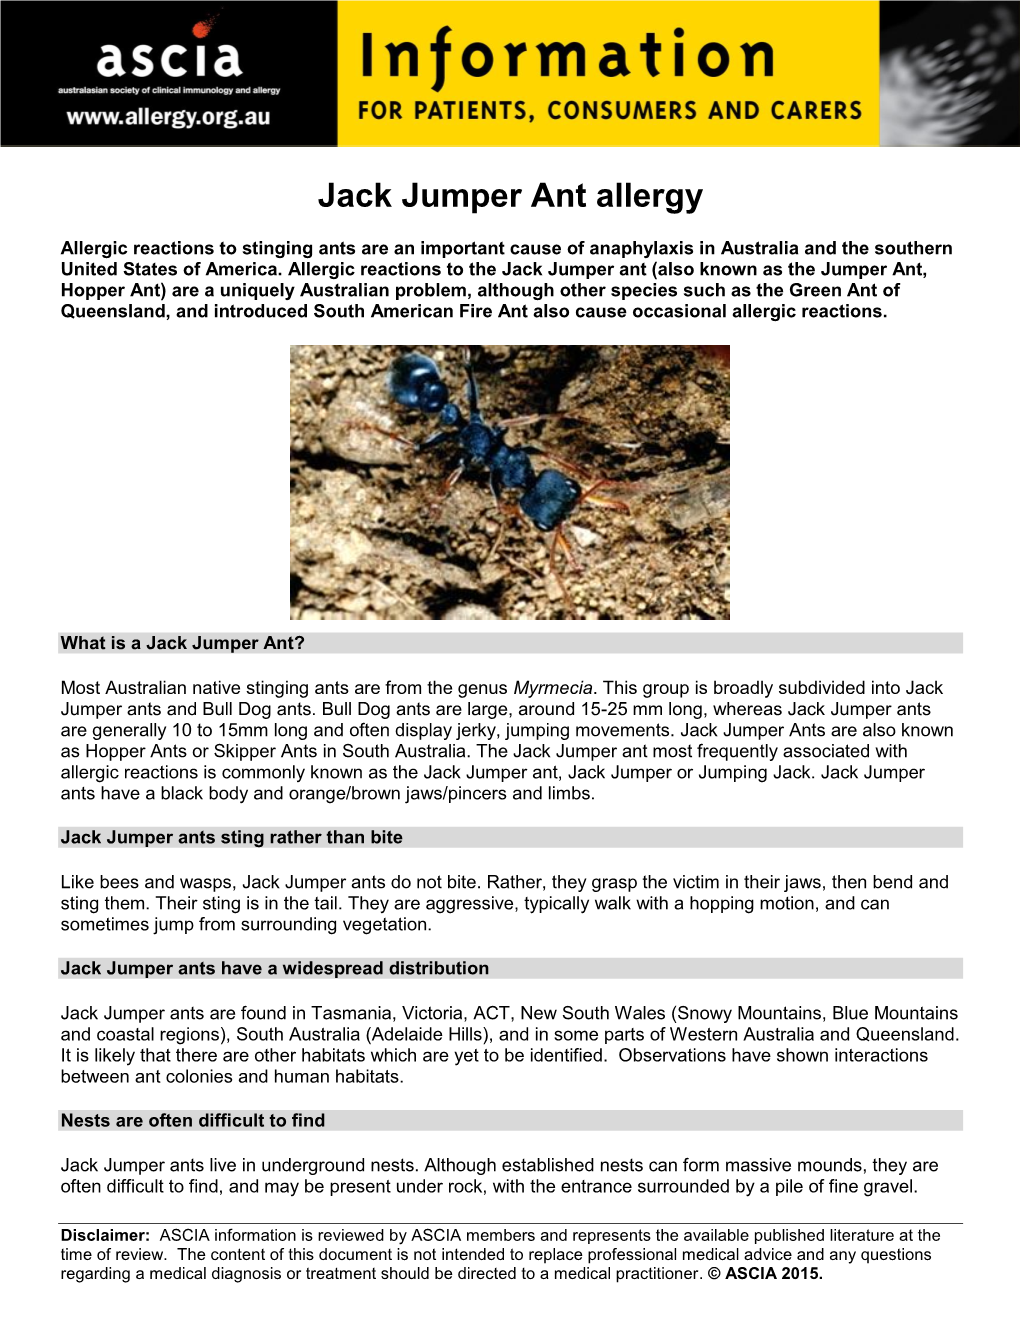 Jack Jumper Ant Allergies (ASCIA)